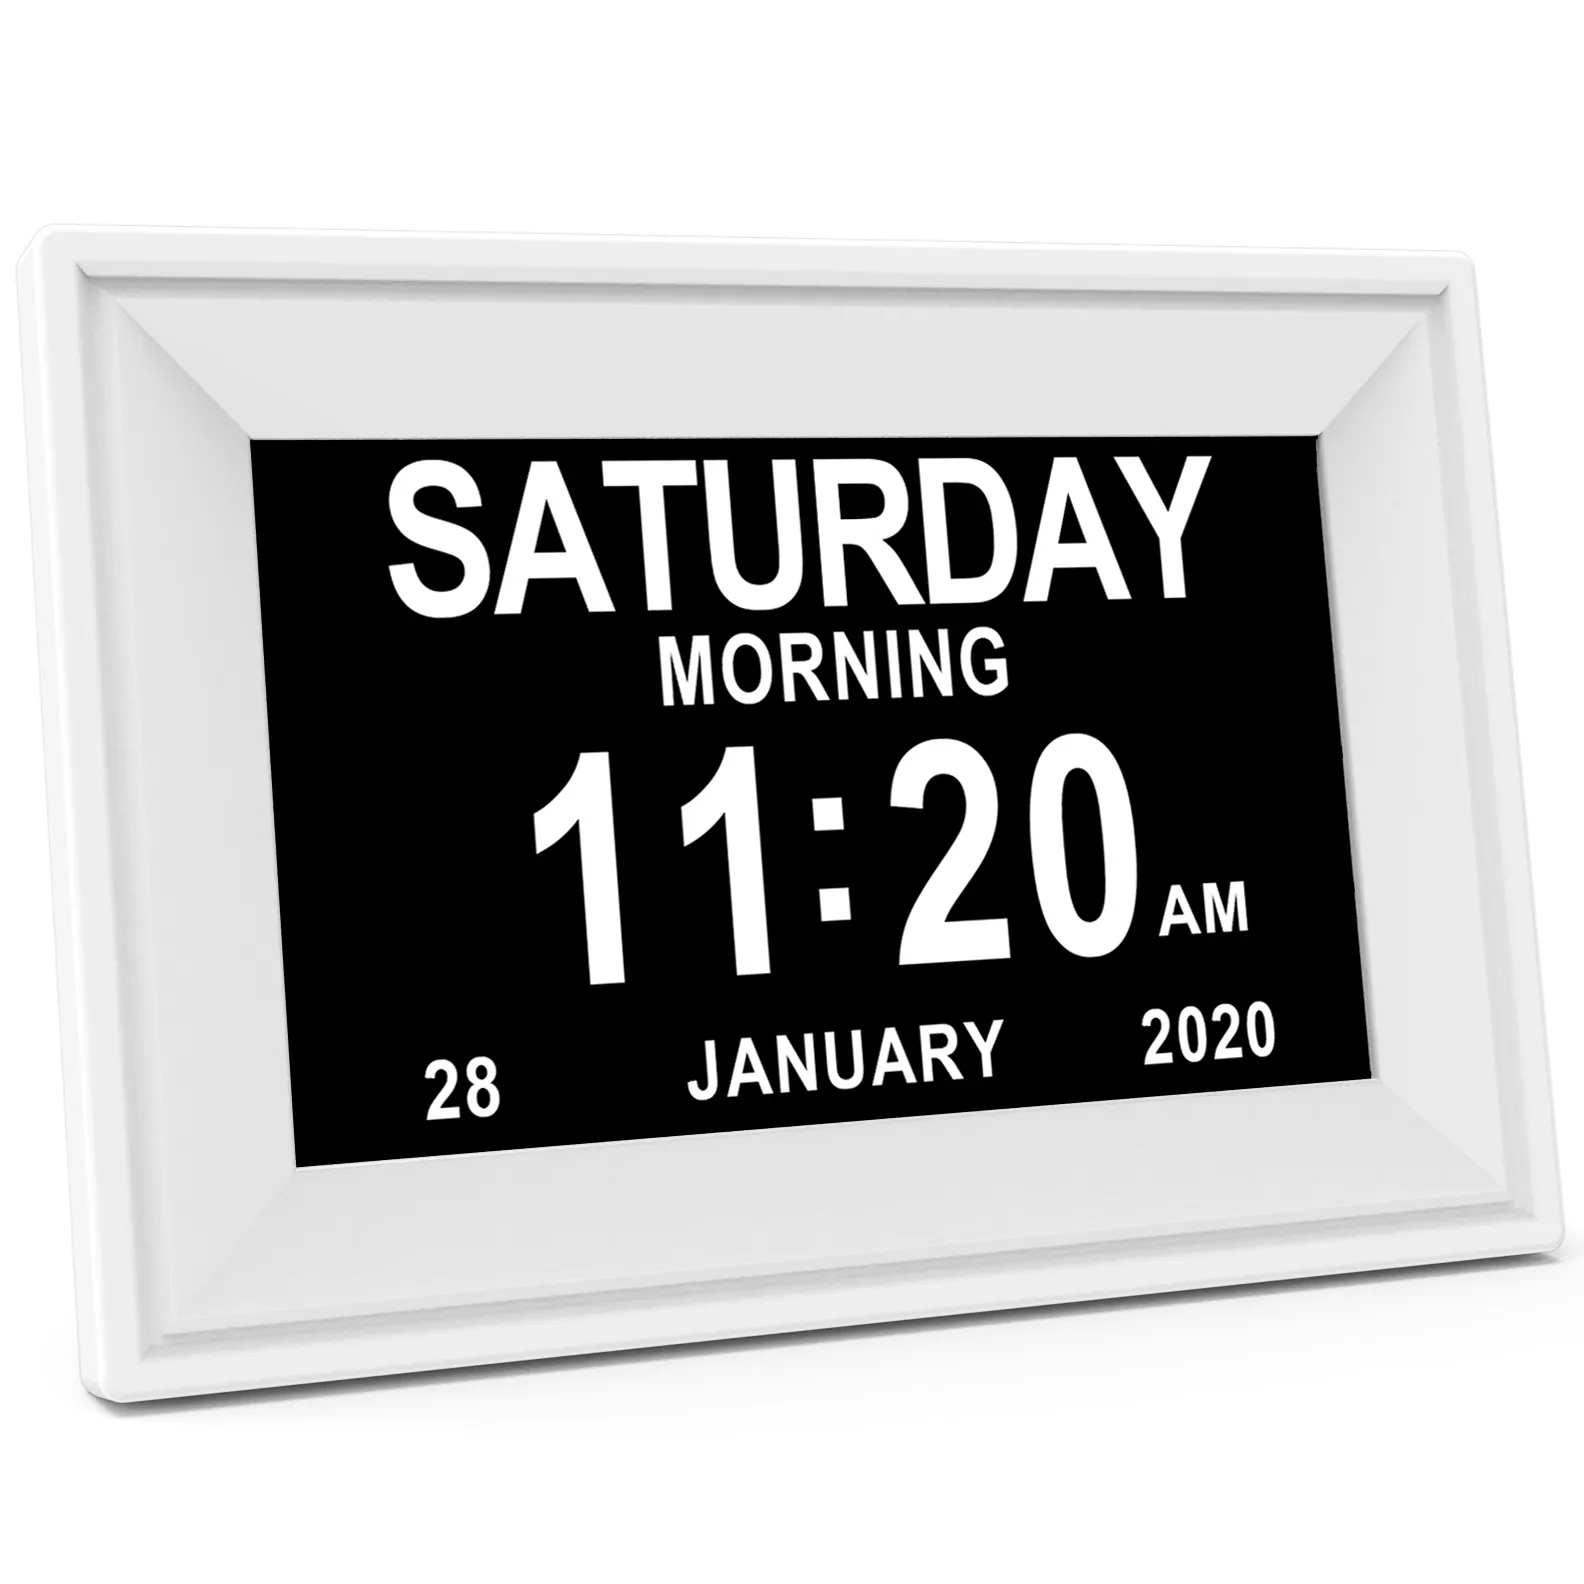 8 inch ips panel Digital Calendar Alarm Clock with Day Date Month Year, wall Desk Clock for seniors, dementia, alzheimer